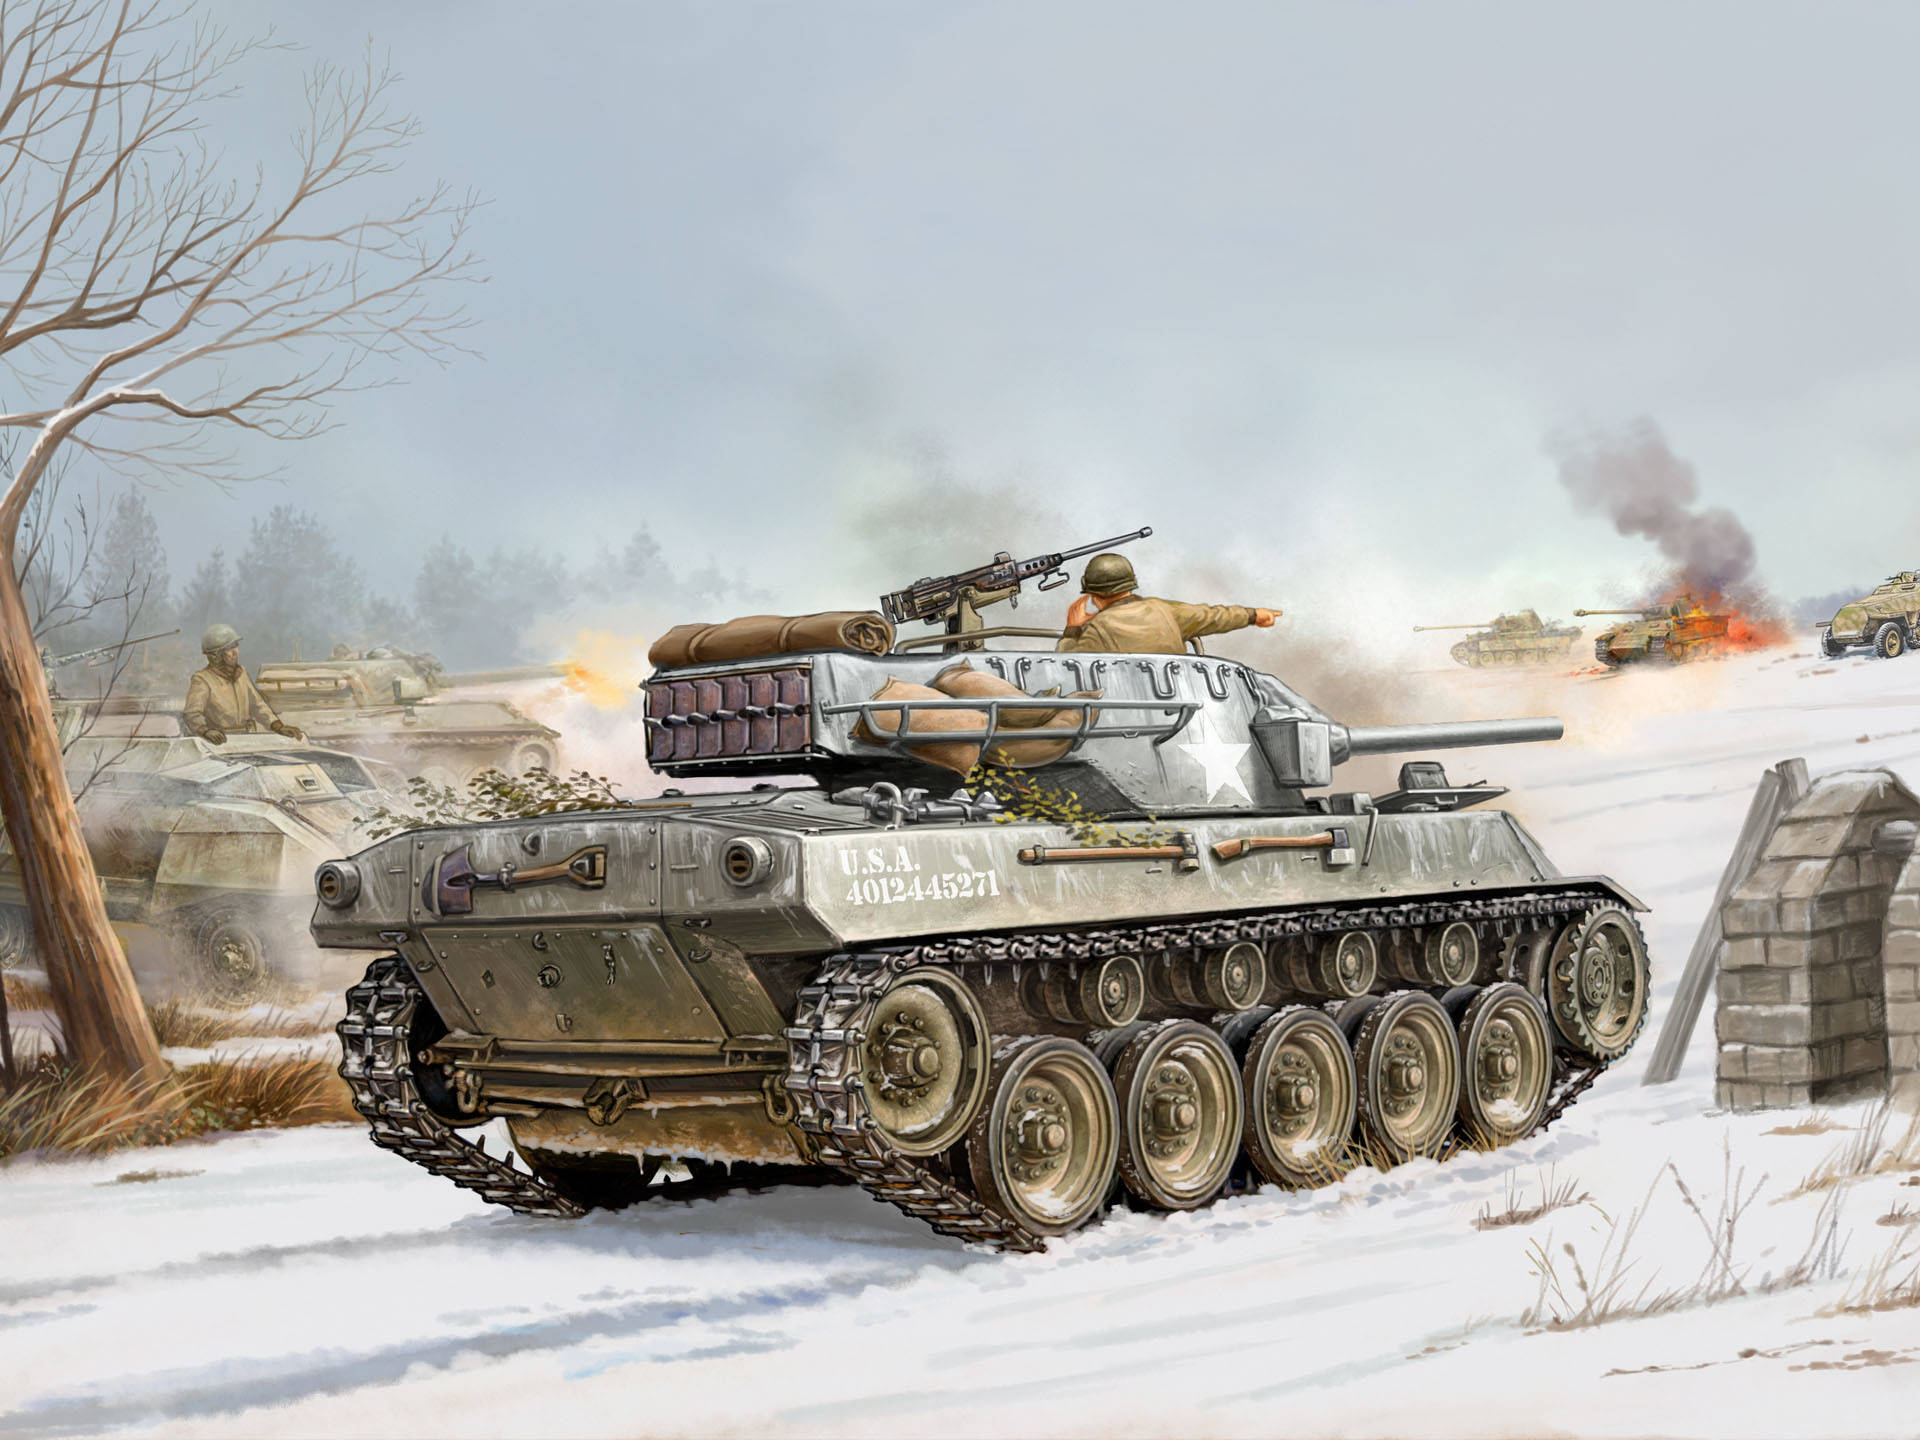 Military Tanks In Snow